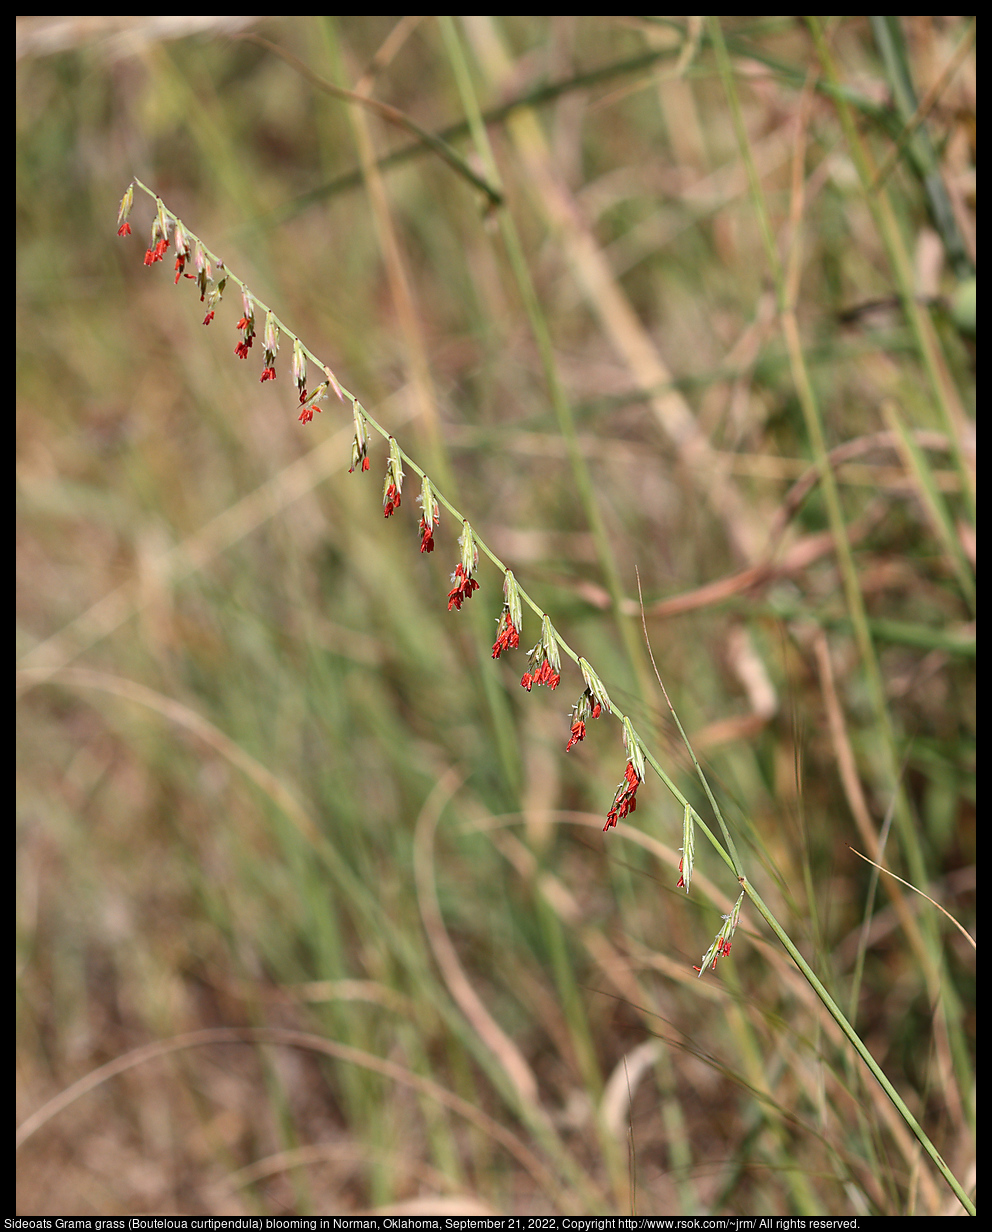 Sideoats Grama grass (Bouteloua curtipendula) blooming in Norman, Oklahoma, September 21, 2022